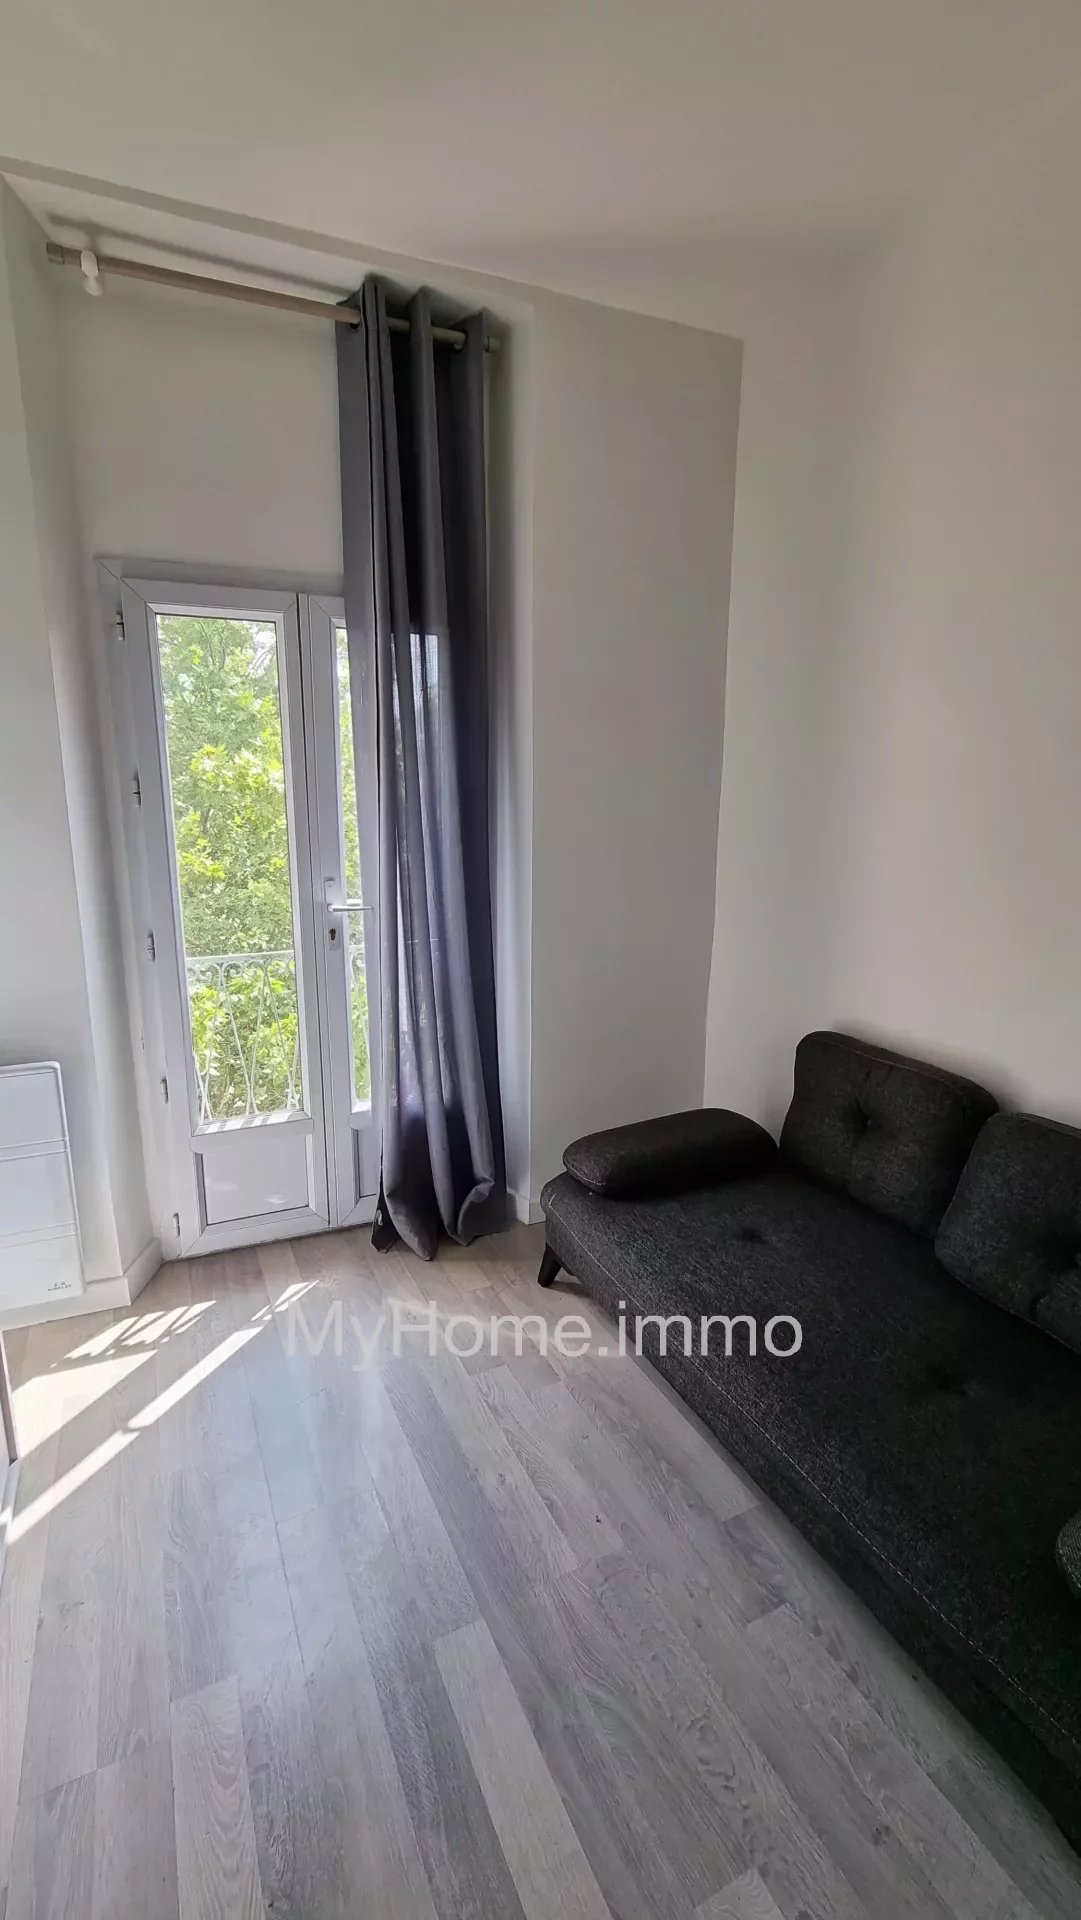 Vente Appartement 20m² 1 Pièce à Nice (06000) - Myhome.Immo